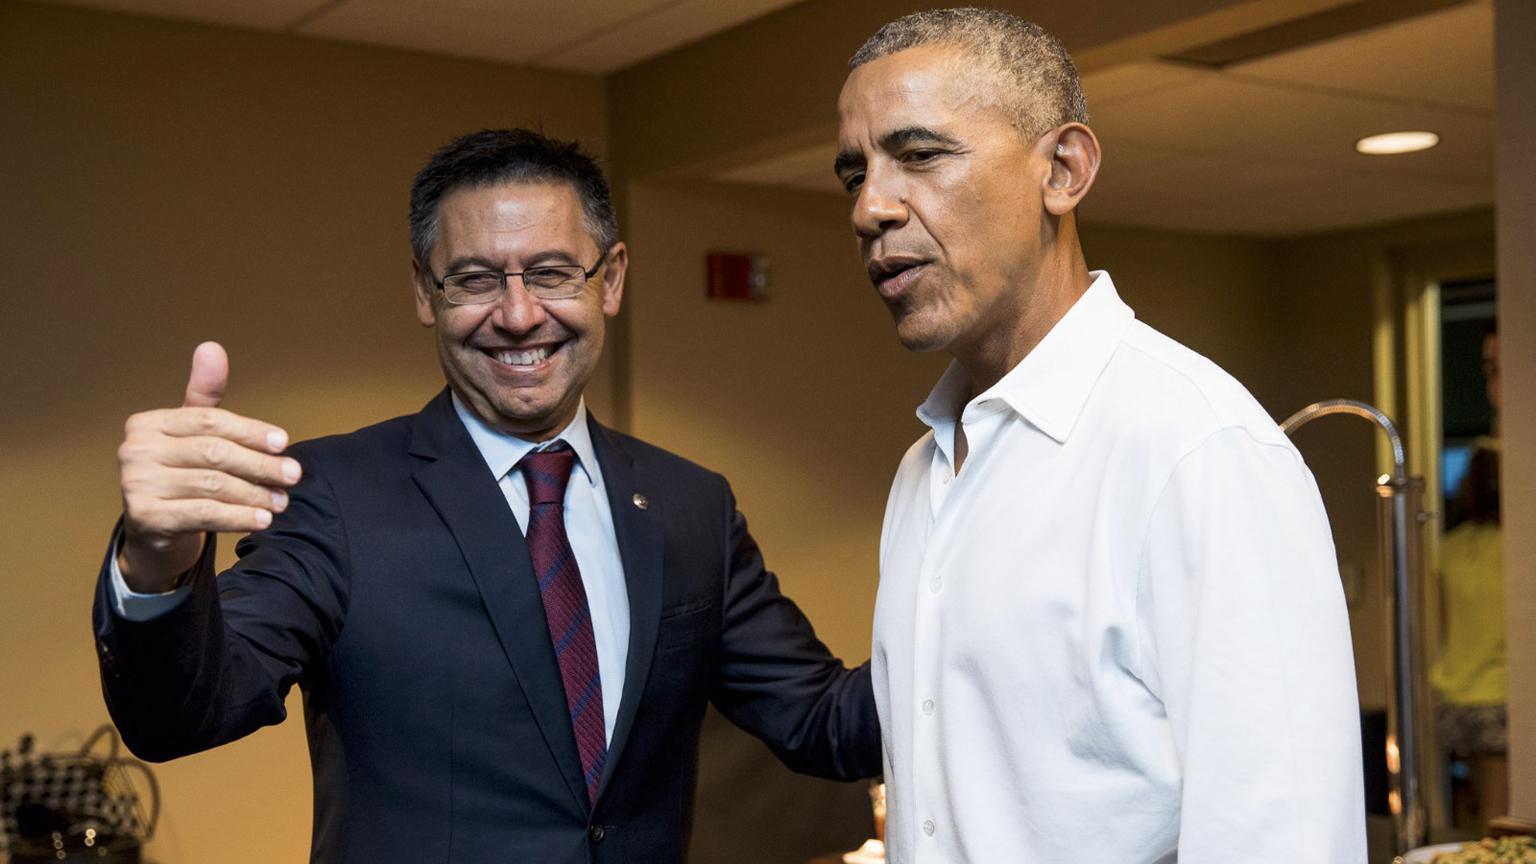 Barça President Josep Maria Bartomeu meets with Barack Obama